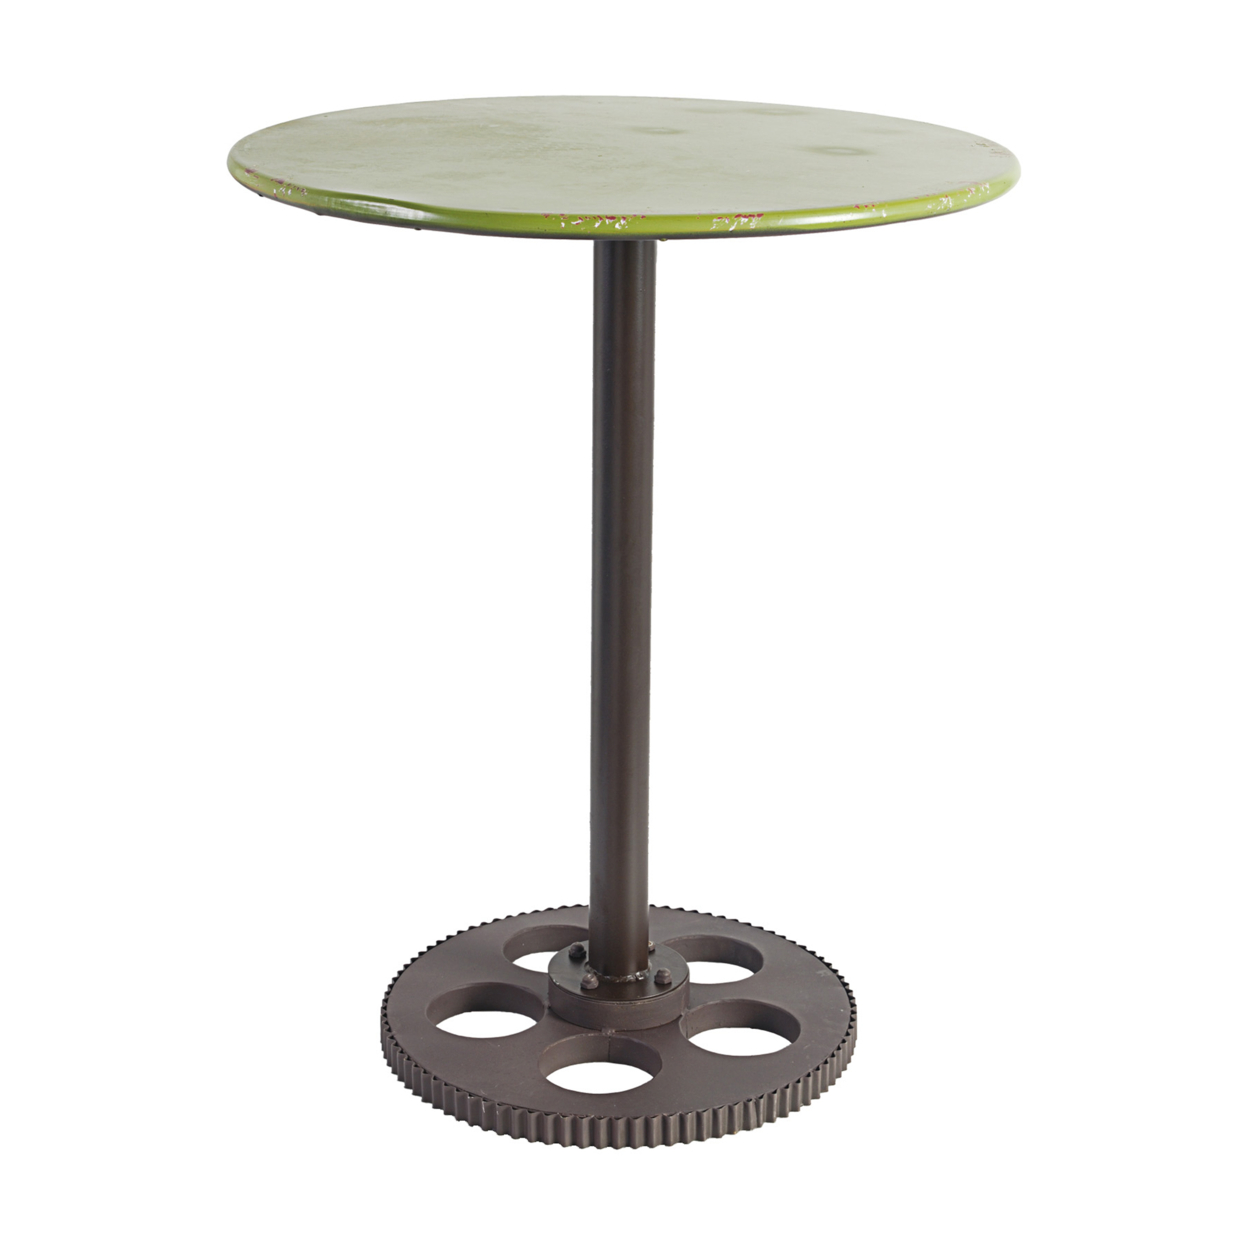 Round Metal Table With Wheel Design Bottom, Multicolor- Saltoro Sherpi